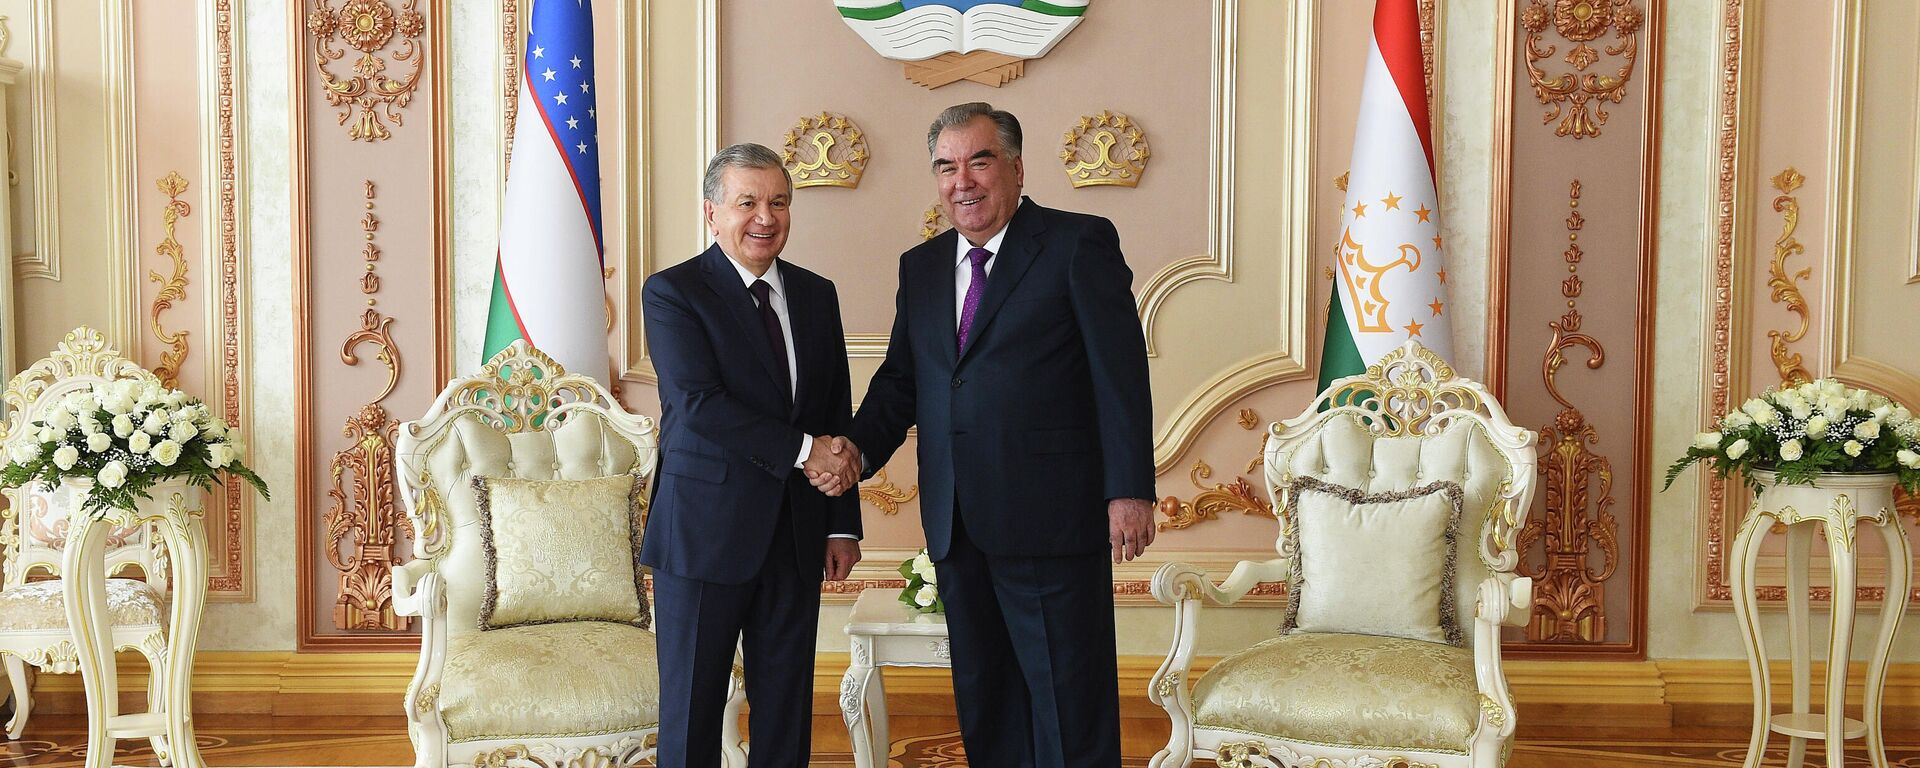 Президент Узбекистана Шавкат Мирзиеев и президент Таджикистана Эмомали Рахмон - Sputnik Таджикистан, 1920, 11.06.2021